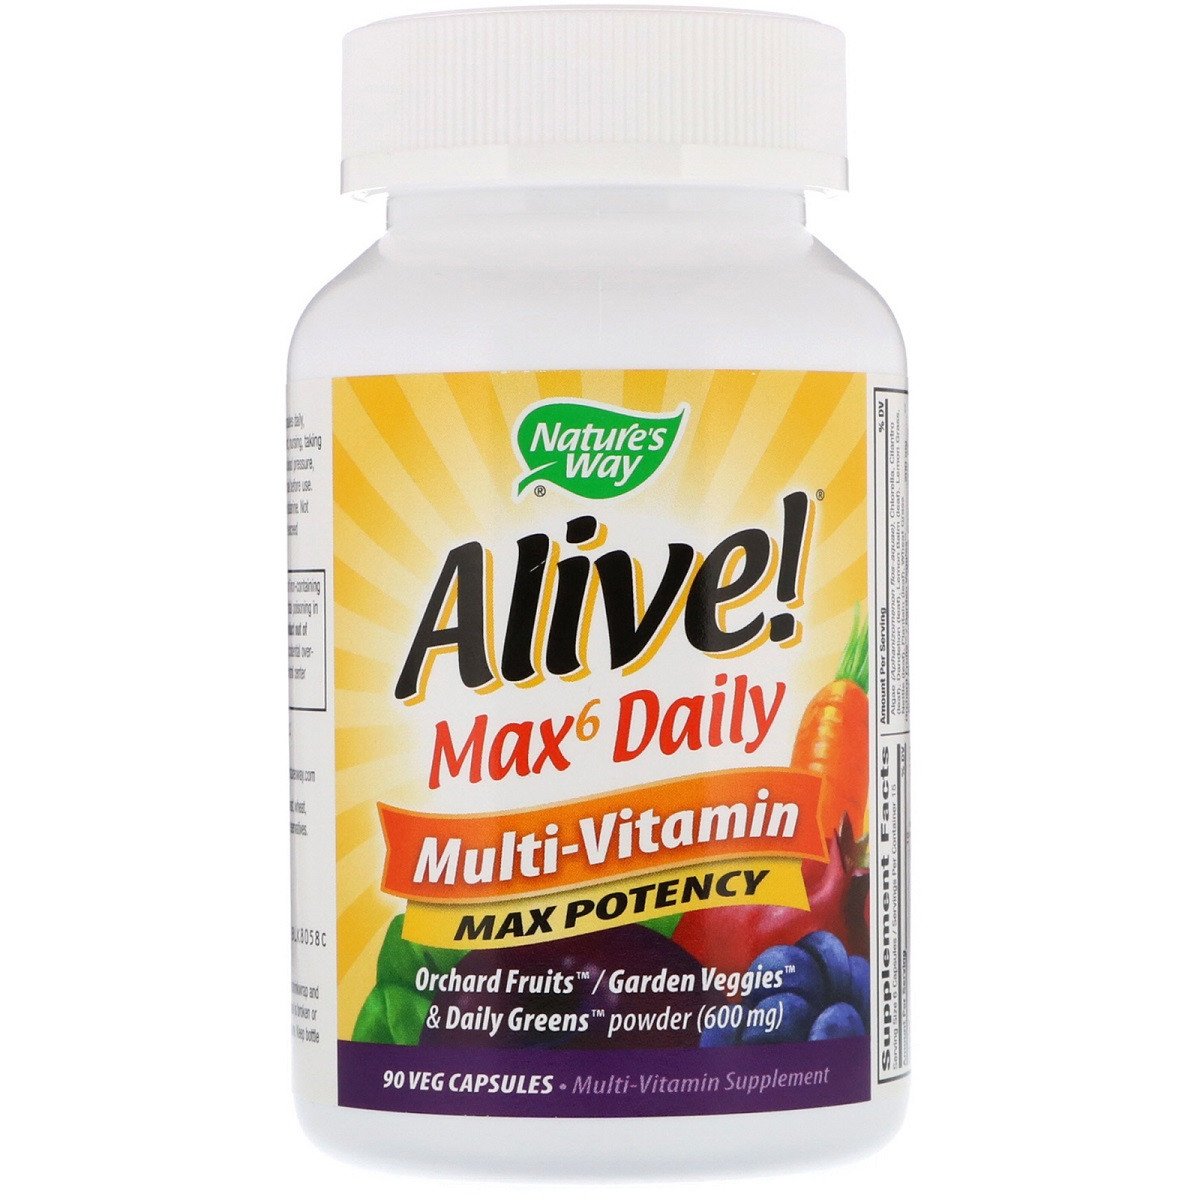 Мультивитамины Max6, Alive! Max6 Daily, Multi-Vitamin, Nature's Way 90 Капсул,  ml, Nature's Way. Vitamin Mineral Complex. General Health Immunity enhancement 